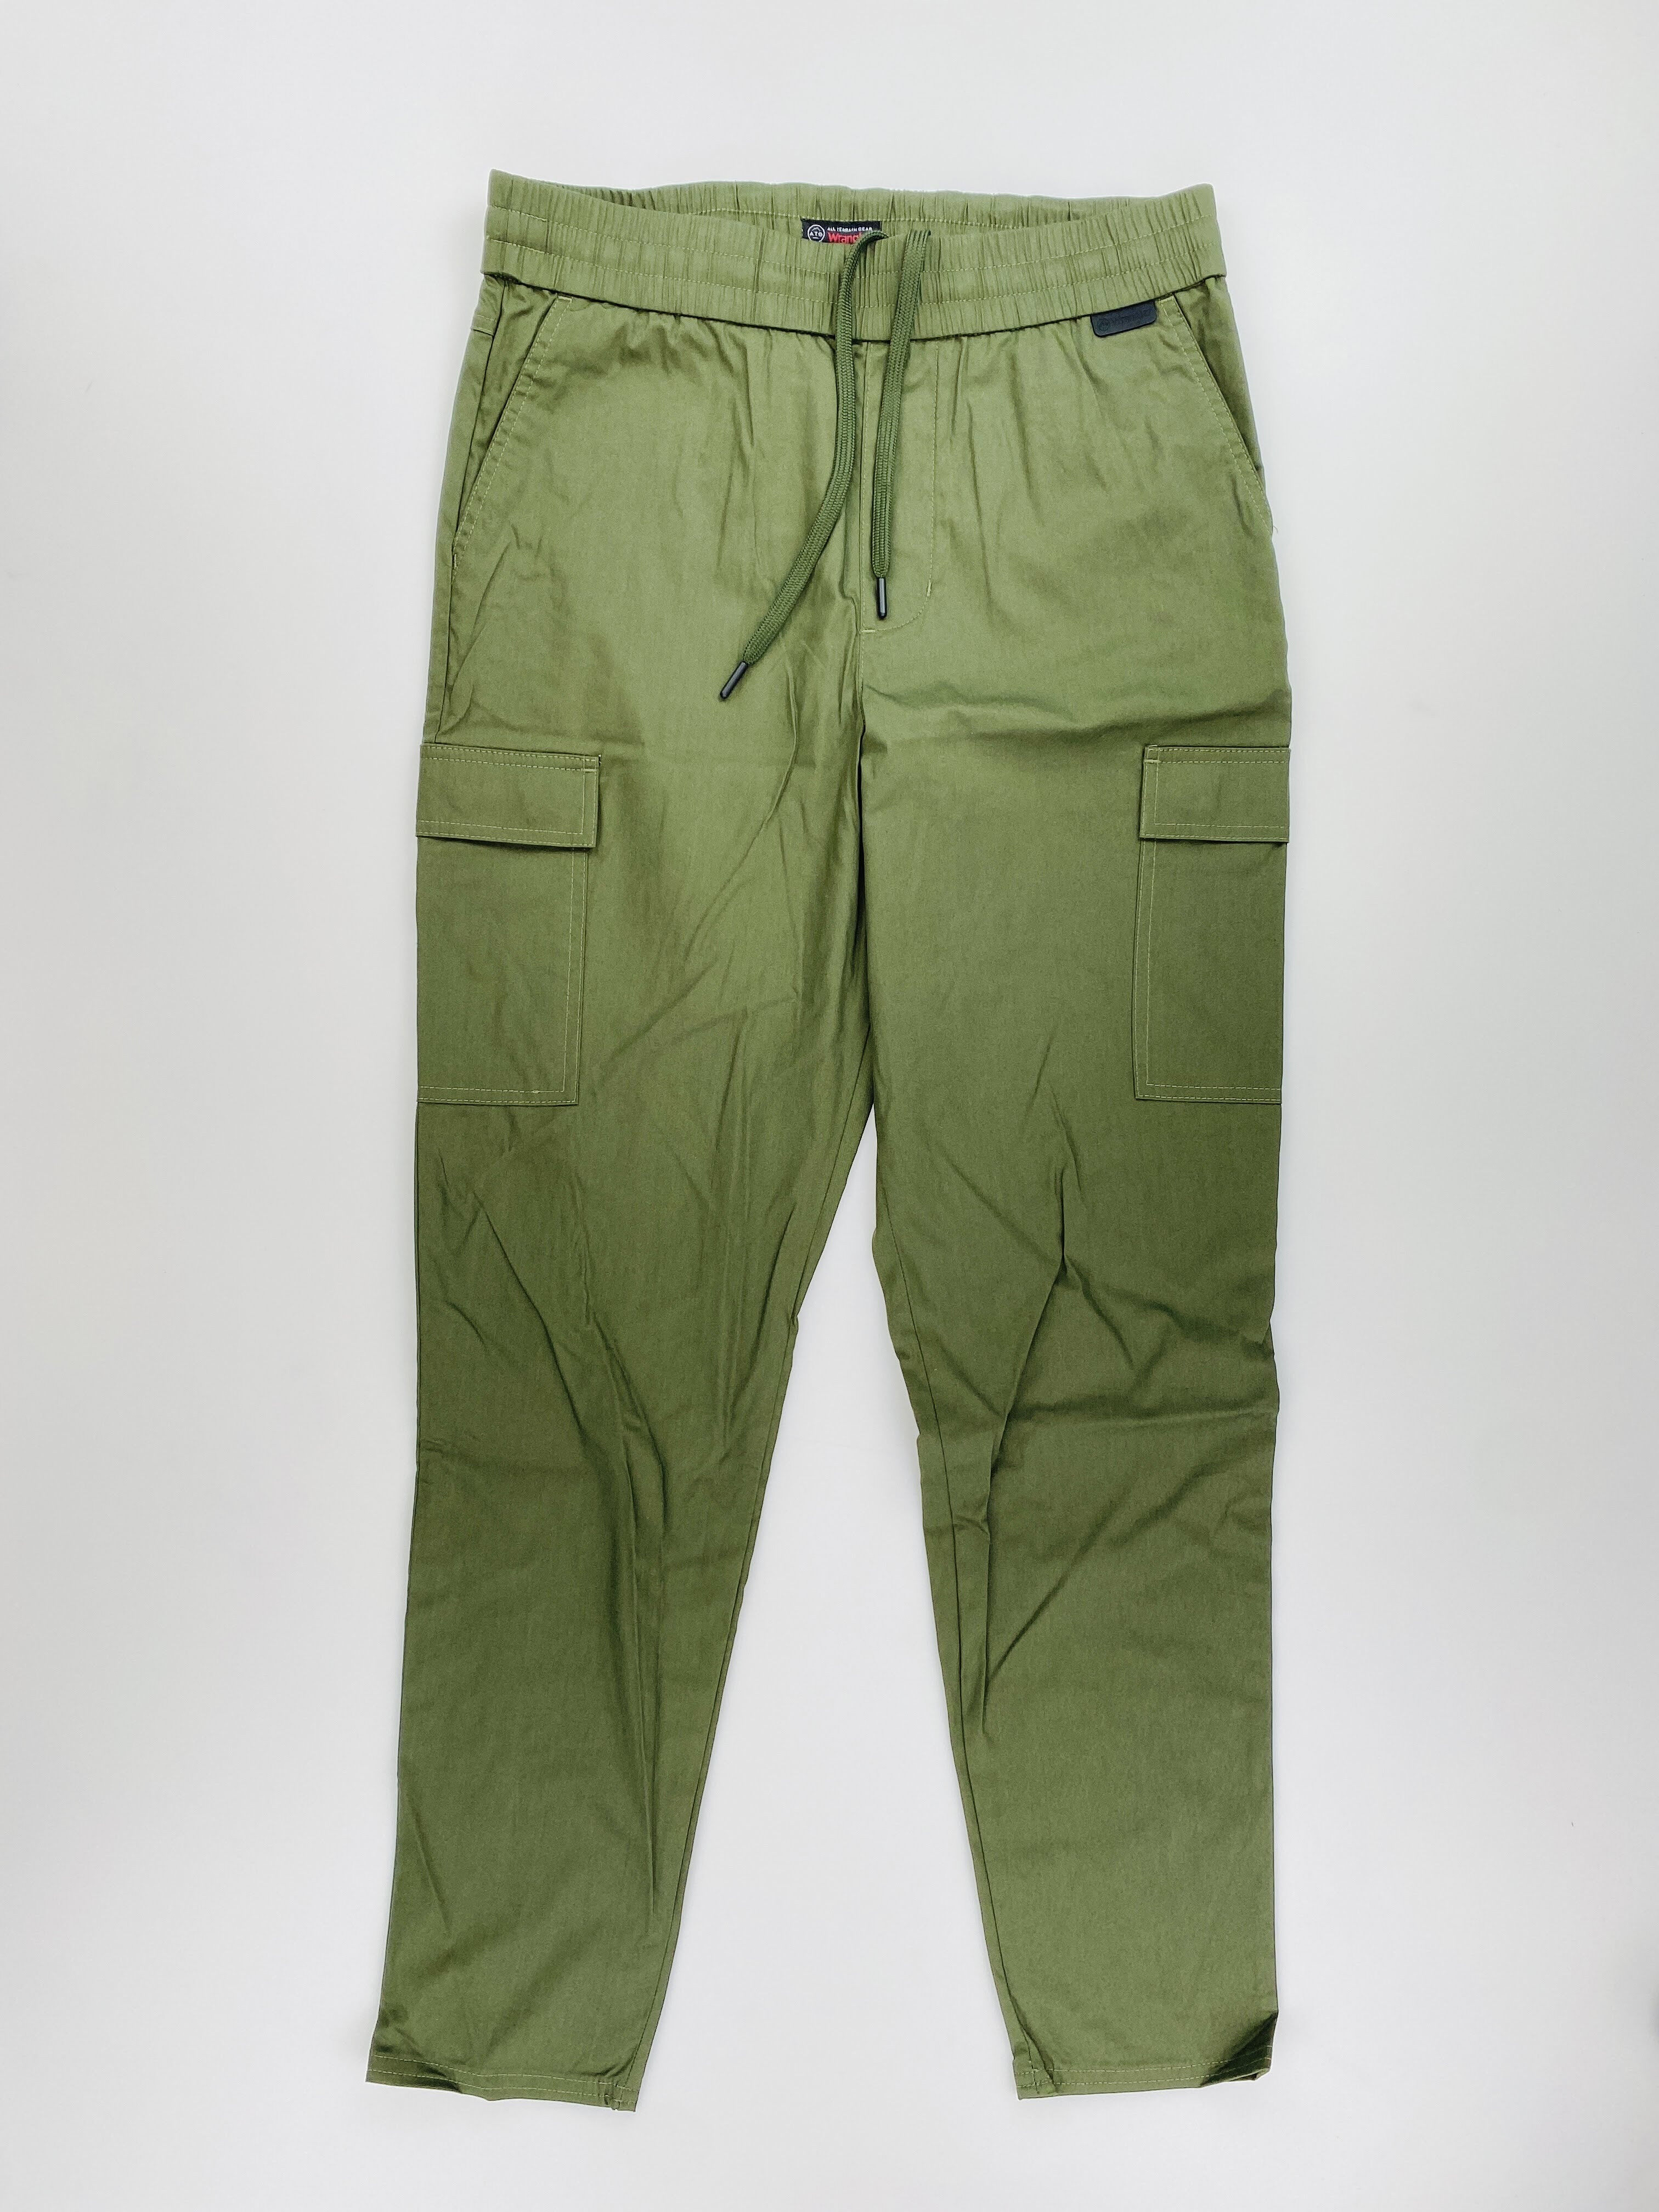 Wrangler Cargo Jogger - Second Hand Walking trousers - Women's - Olive green - US 28 | Hardloop